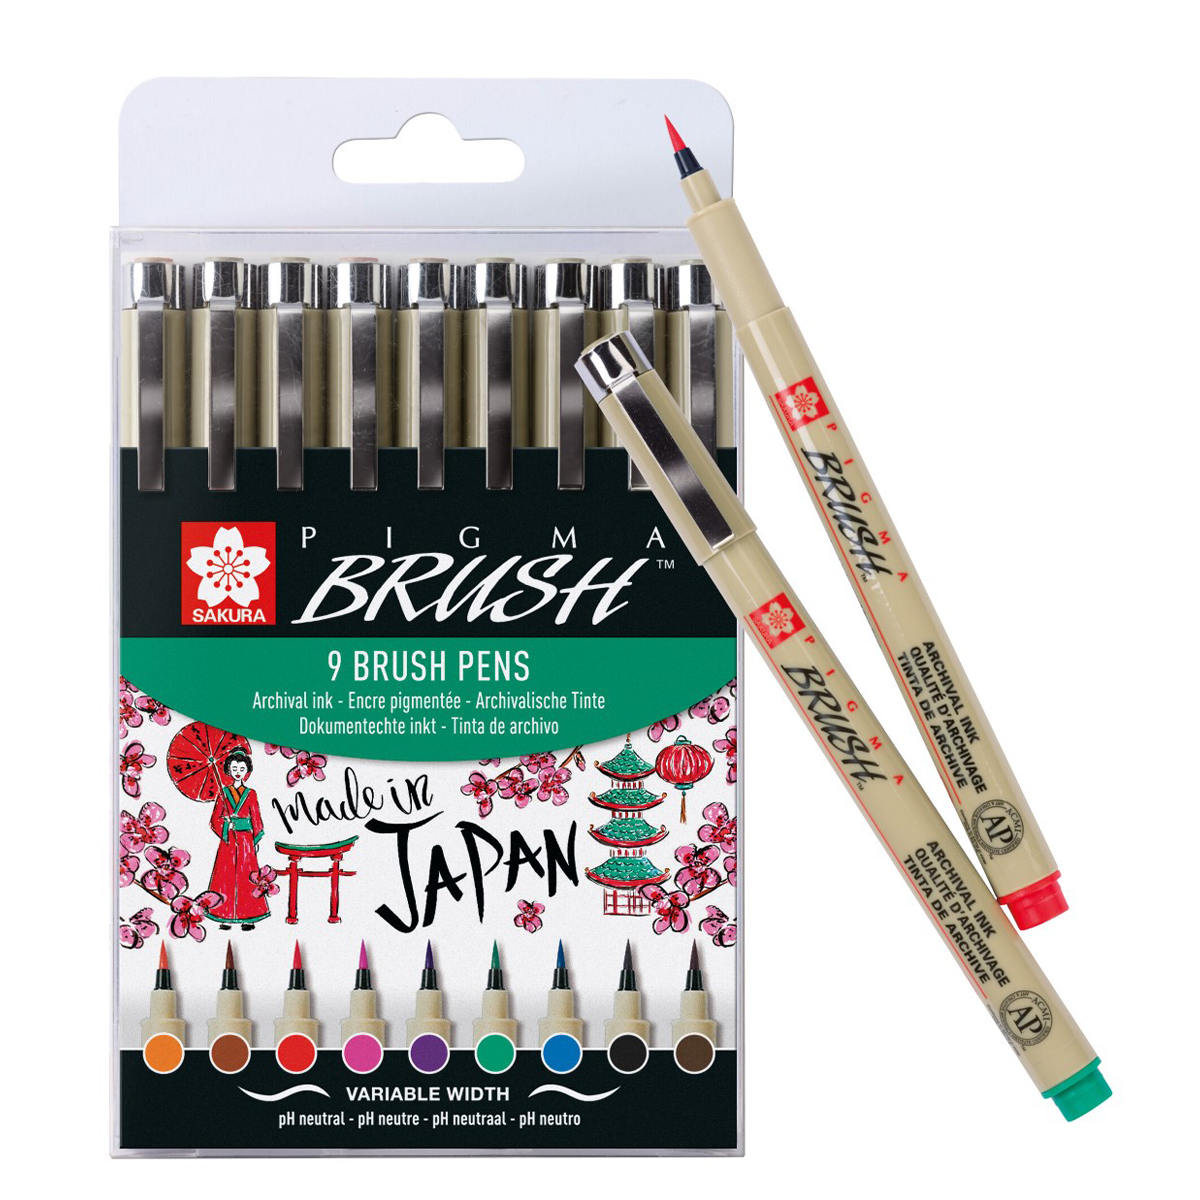 Pigma Micron Brush Color sæt 9 stk i gruppen Penne / Produktserie / Pigma Micron hos Voorcrea (103307)